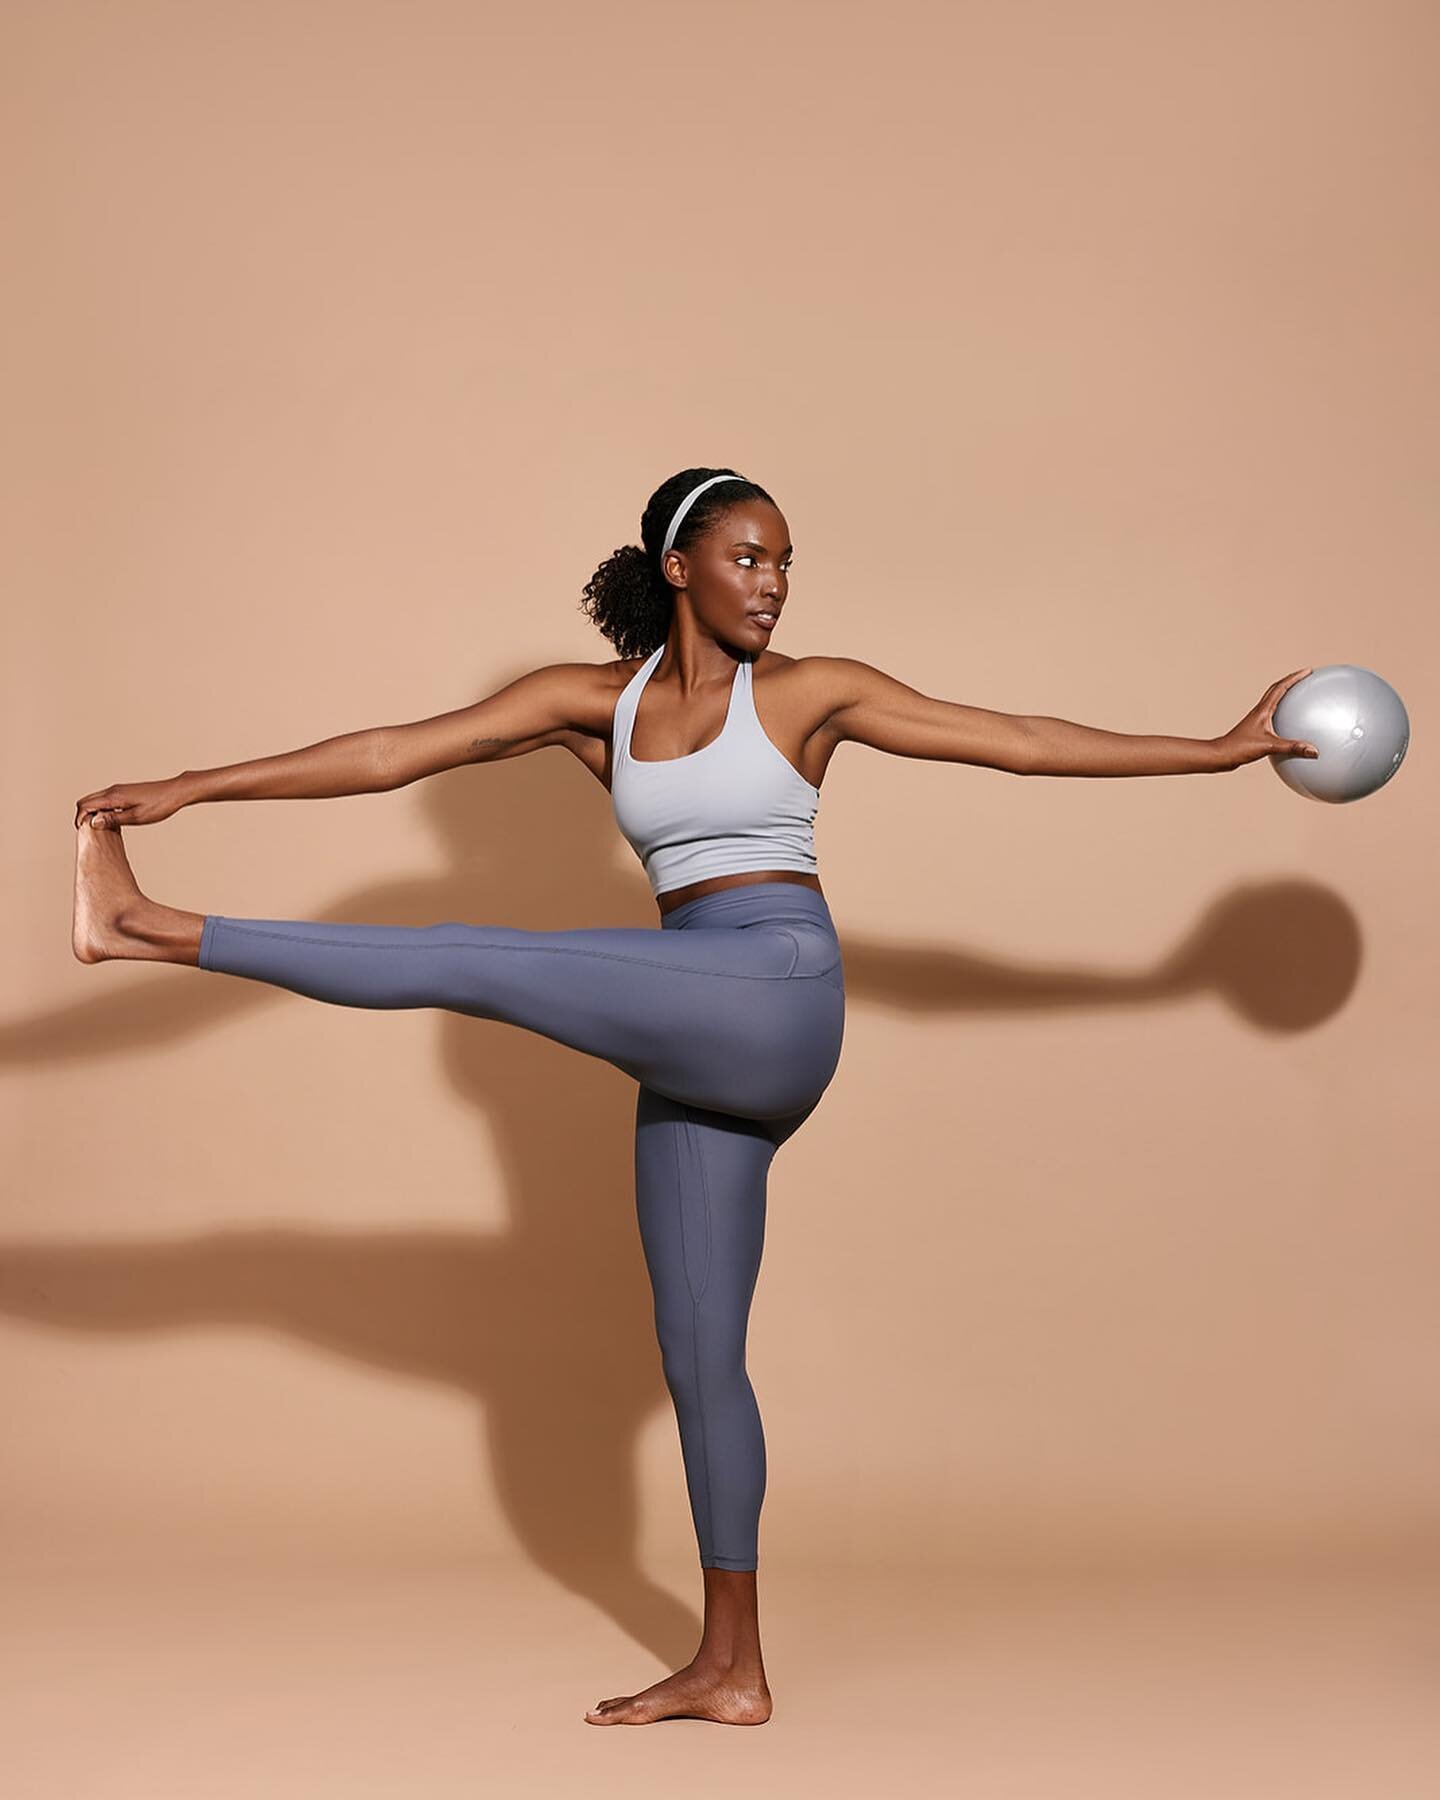 It&rsquo;s all about balance ⚖️

#fitnessmodel #pilates #yogaball #athlete #runner #sluagency